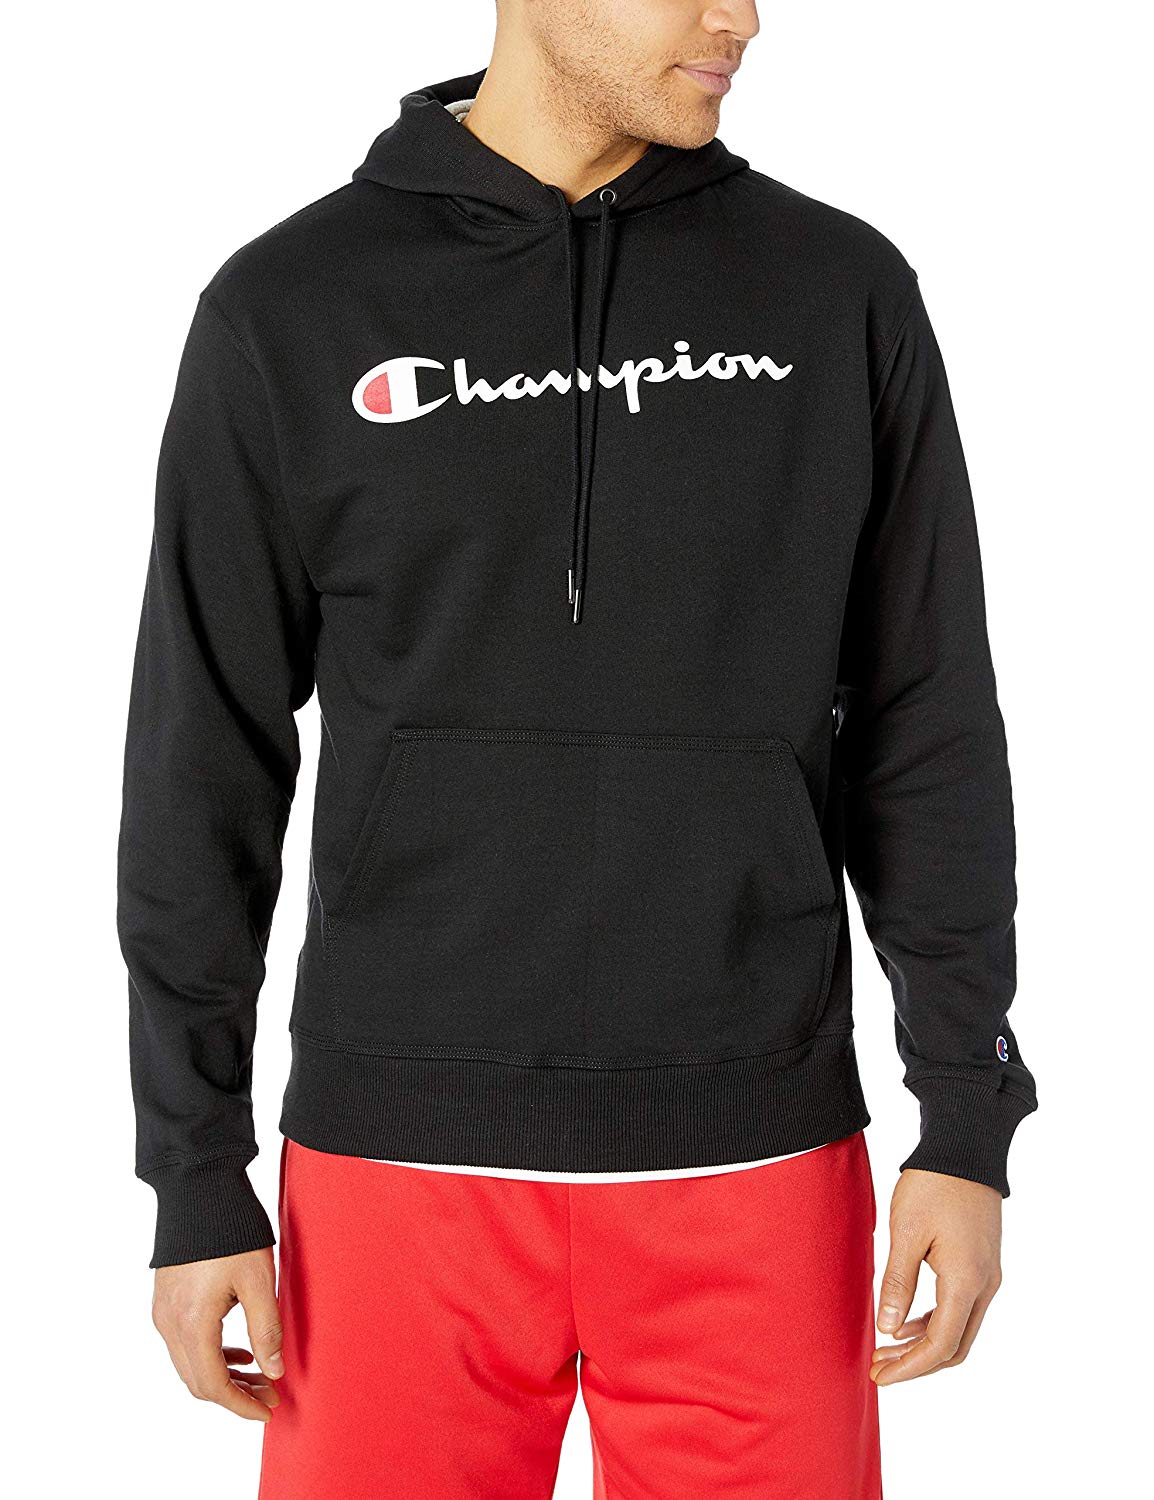 graphic champion hoodies